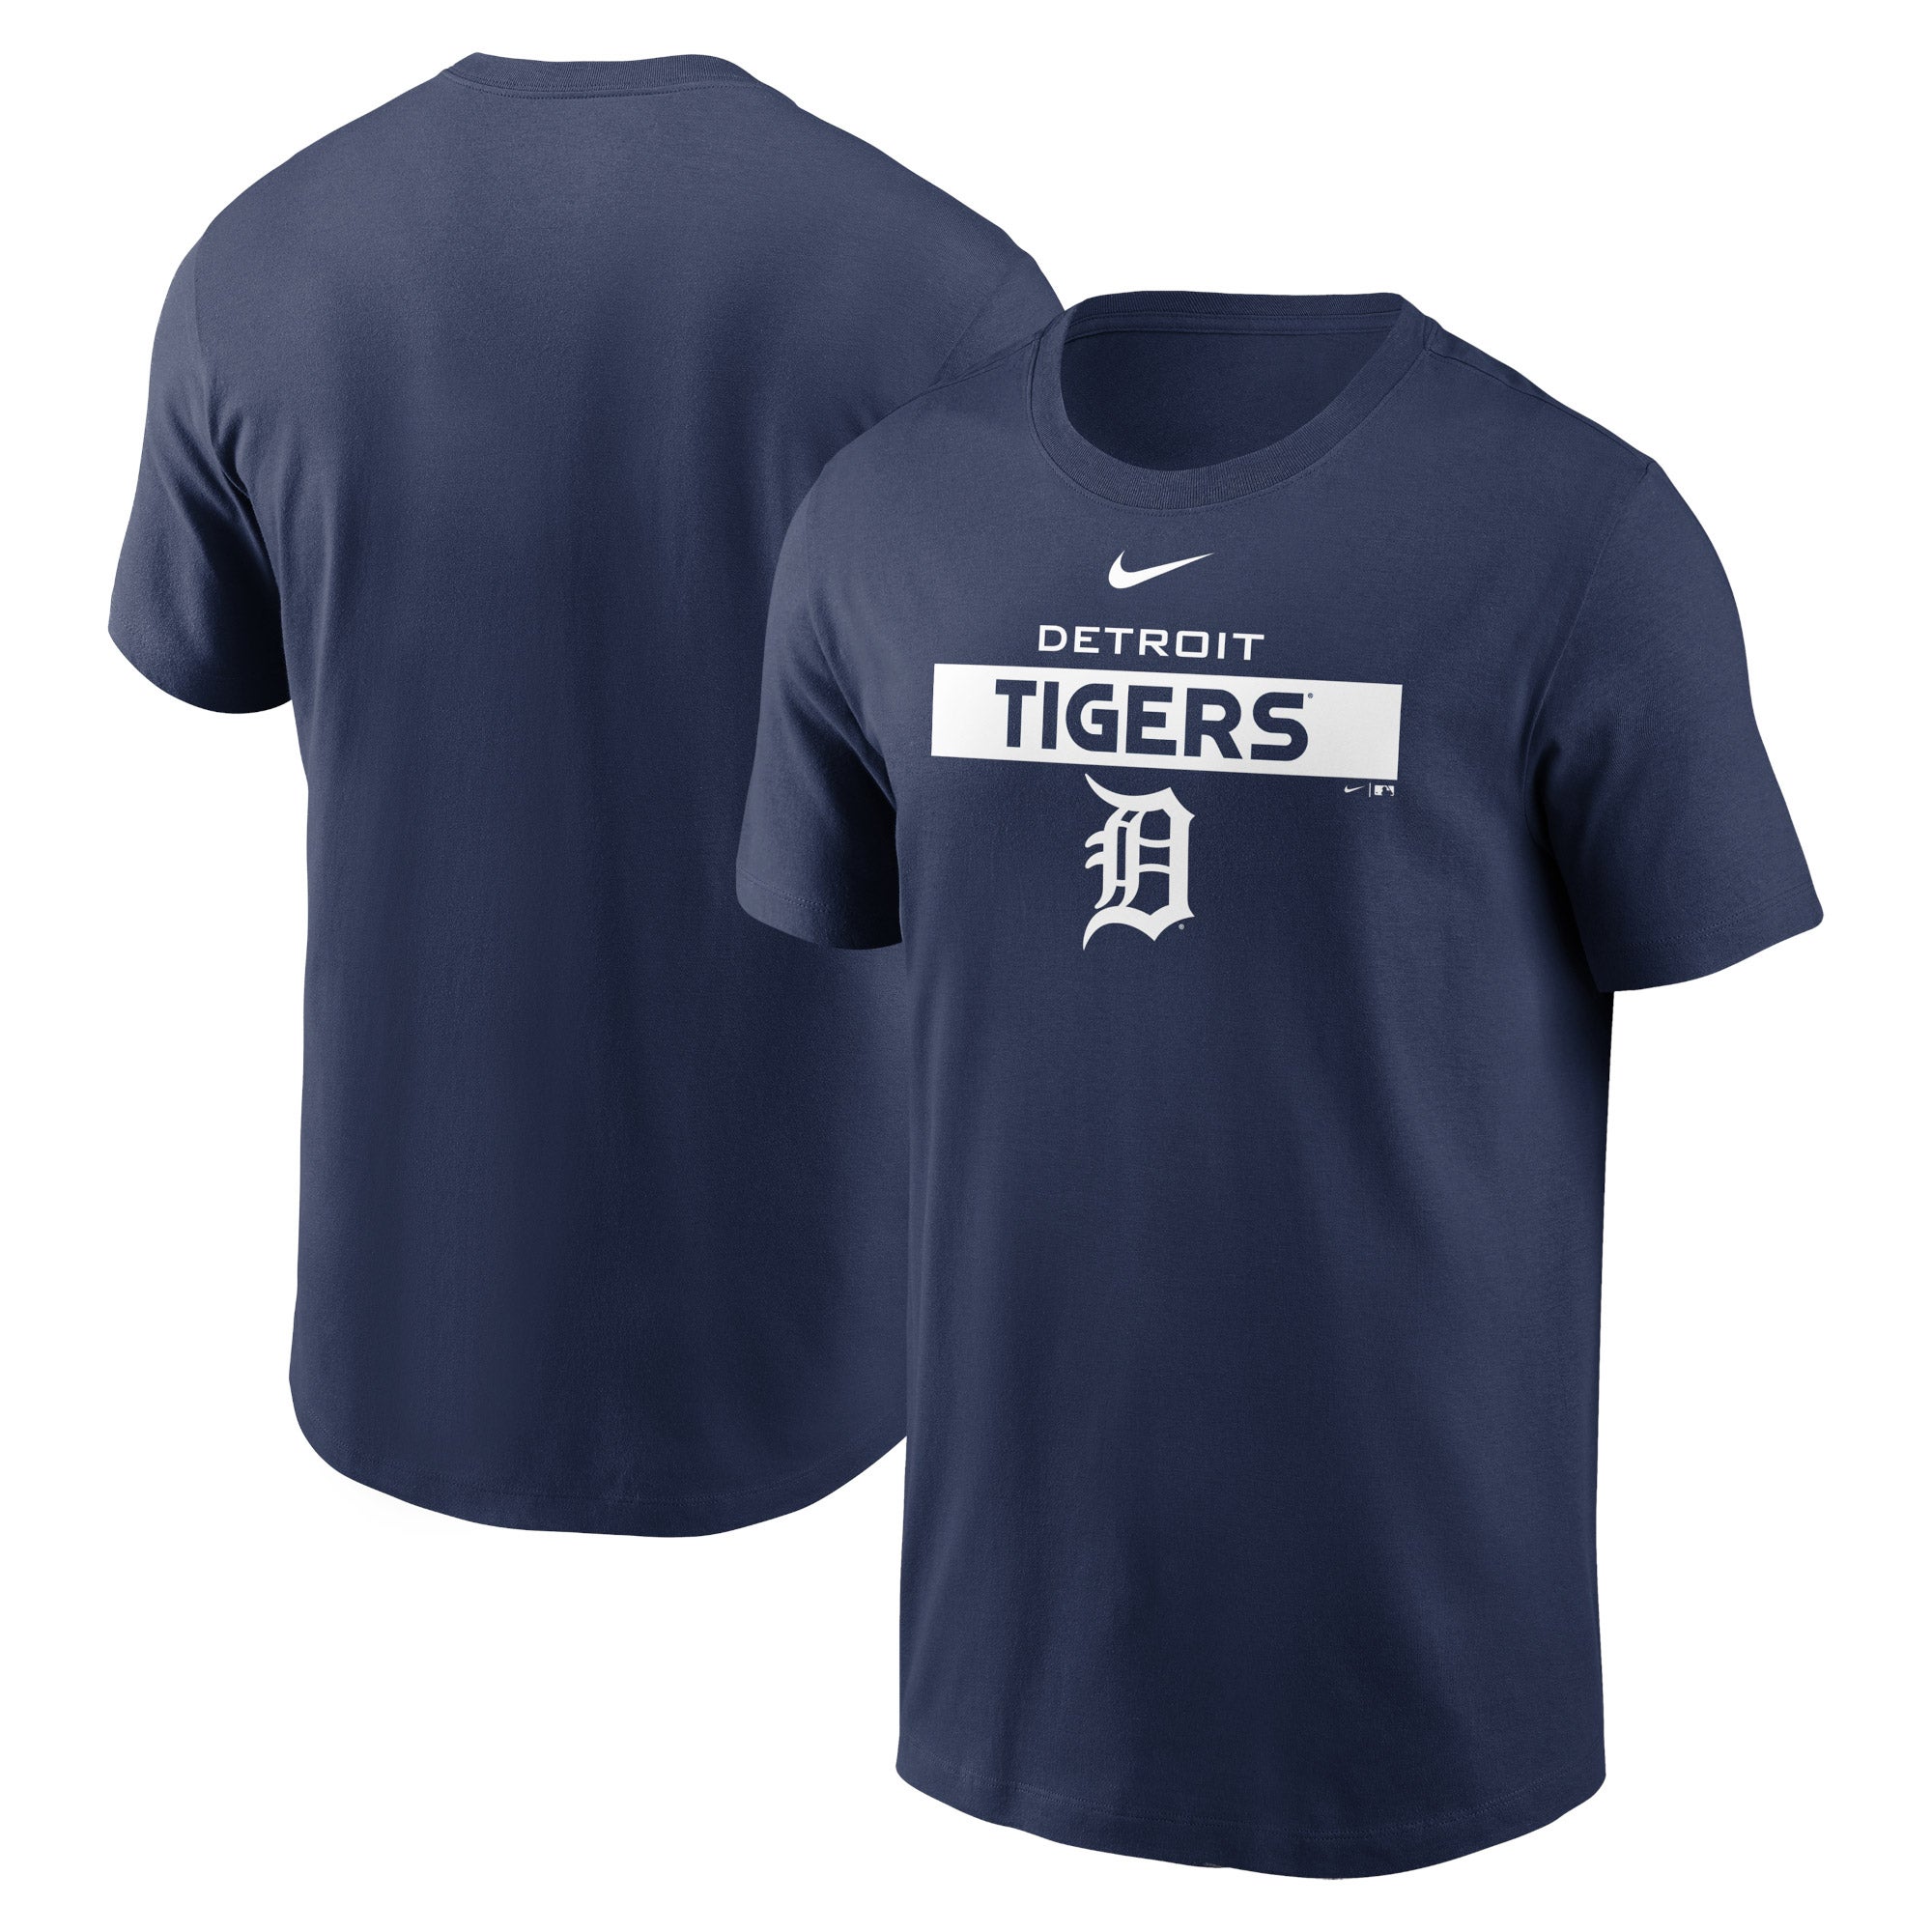 Nike Tigers T-Shirt - Men's